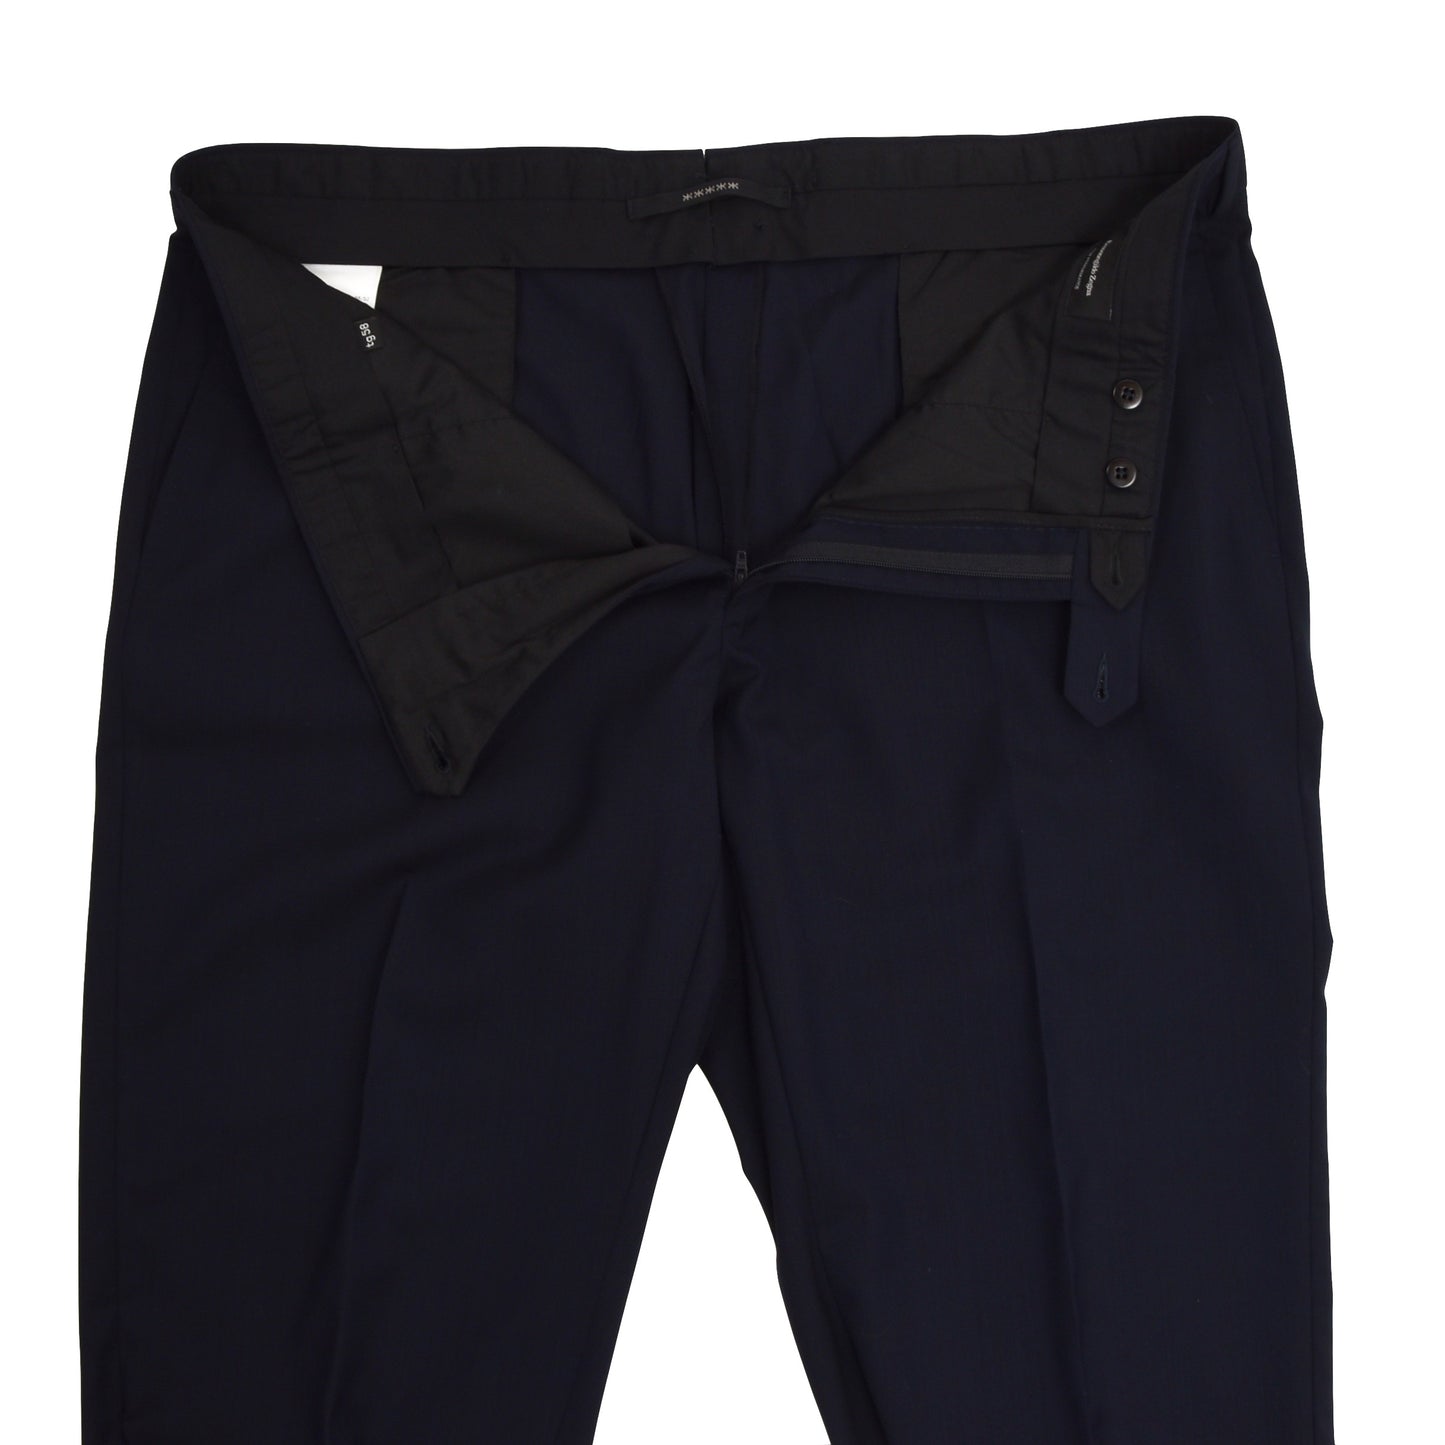 Ermenegildo Zegna High Performance Wool Pants Size 58 - Navy Blue